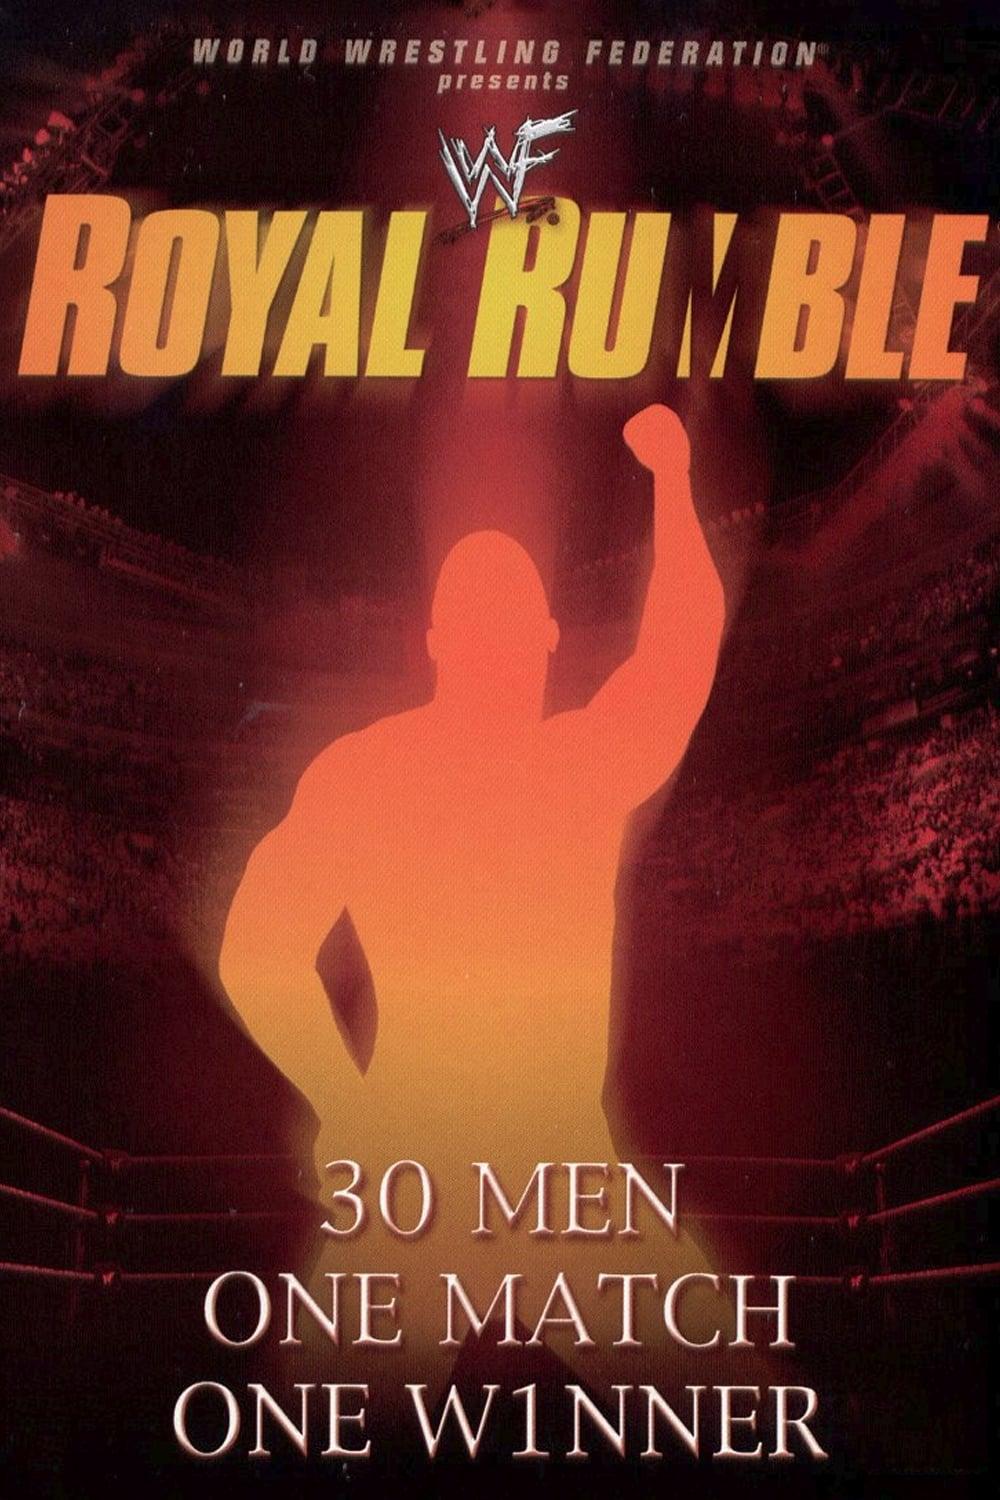 WWE Royal Rumble 2002 poster